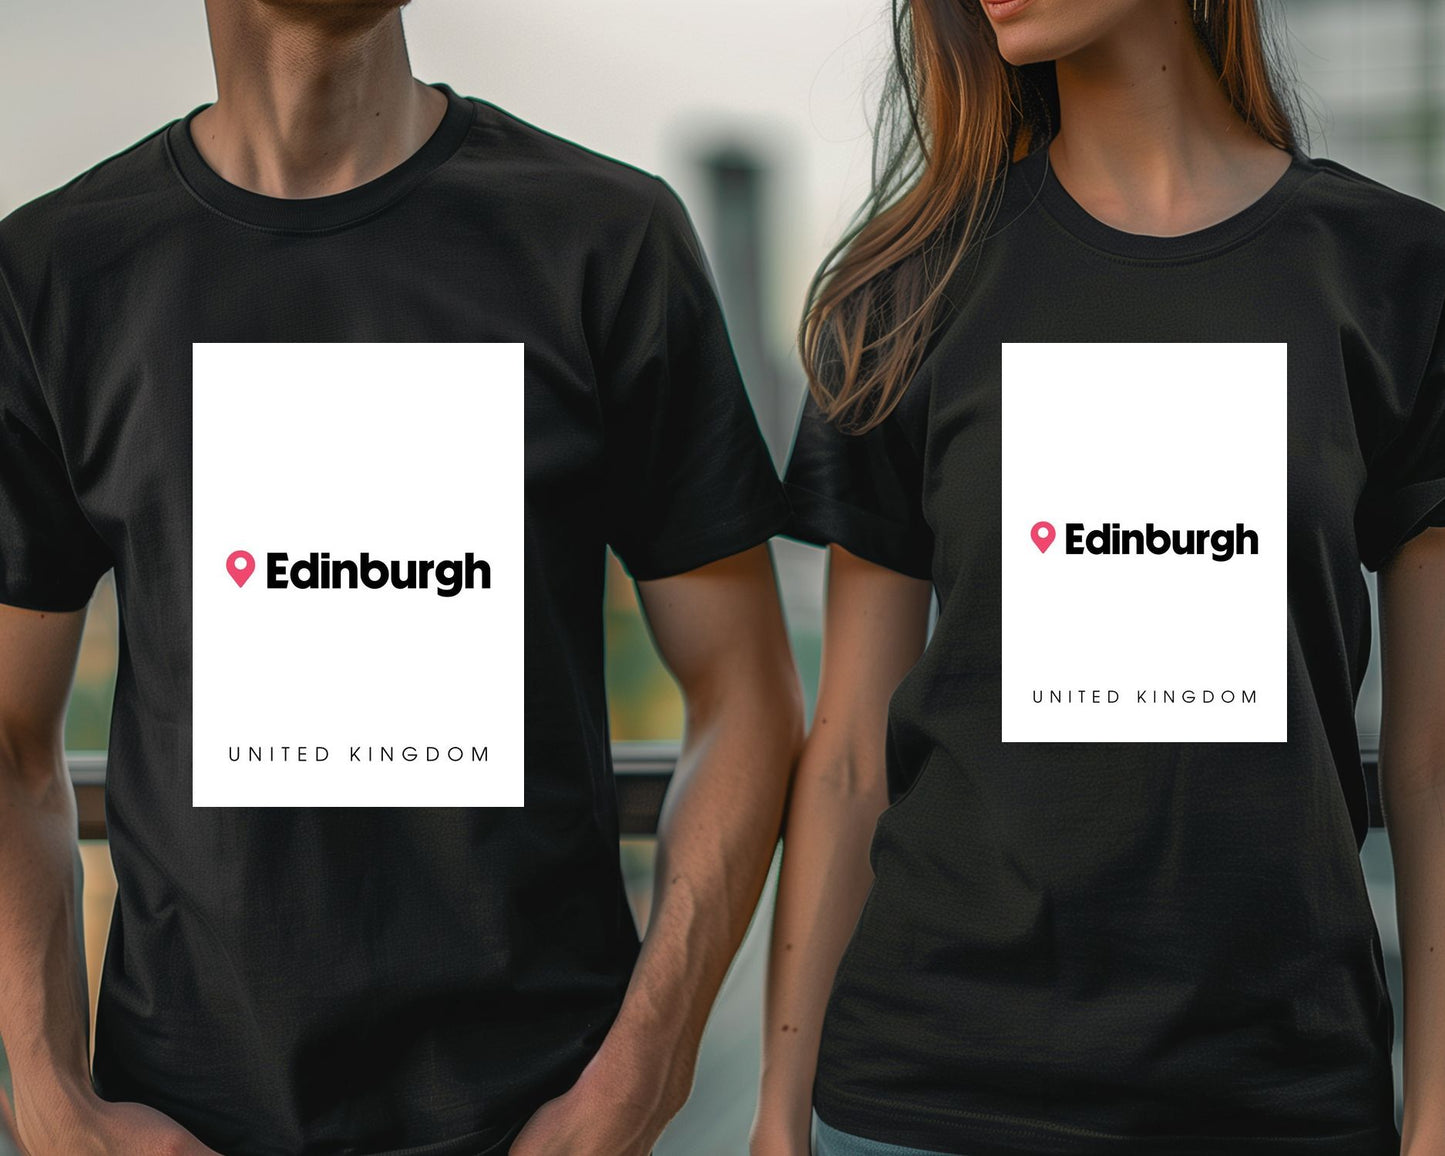 Edinburgh Map - @VickyHanggara